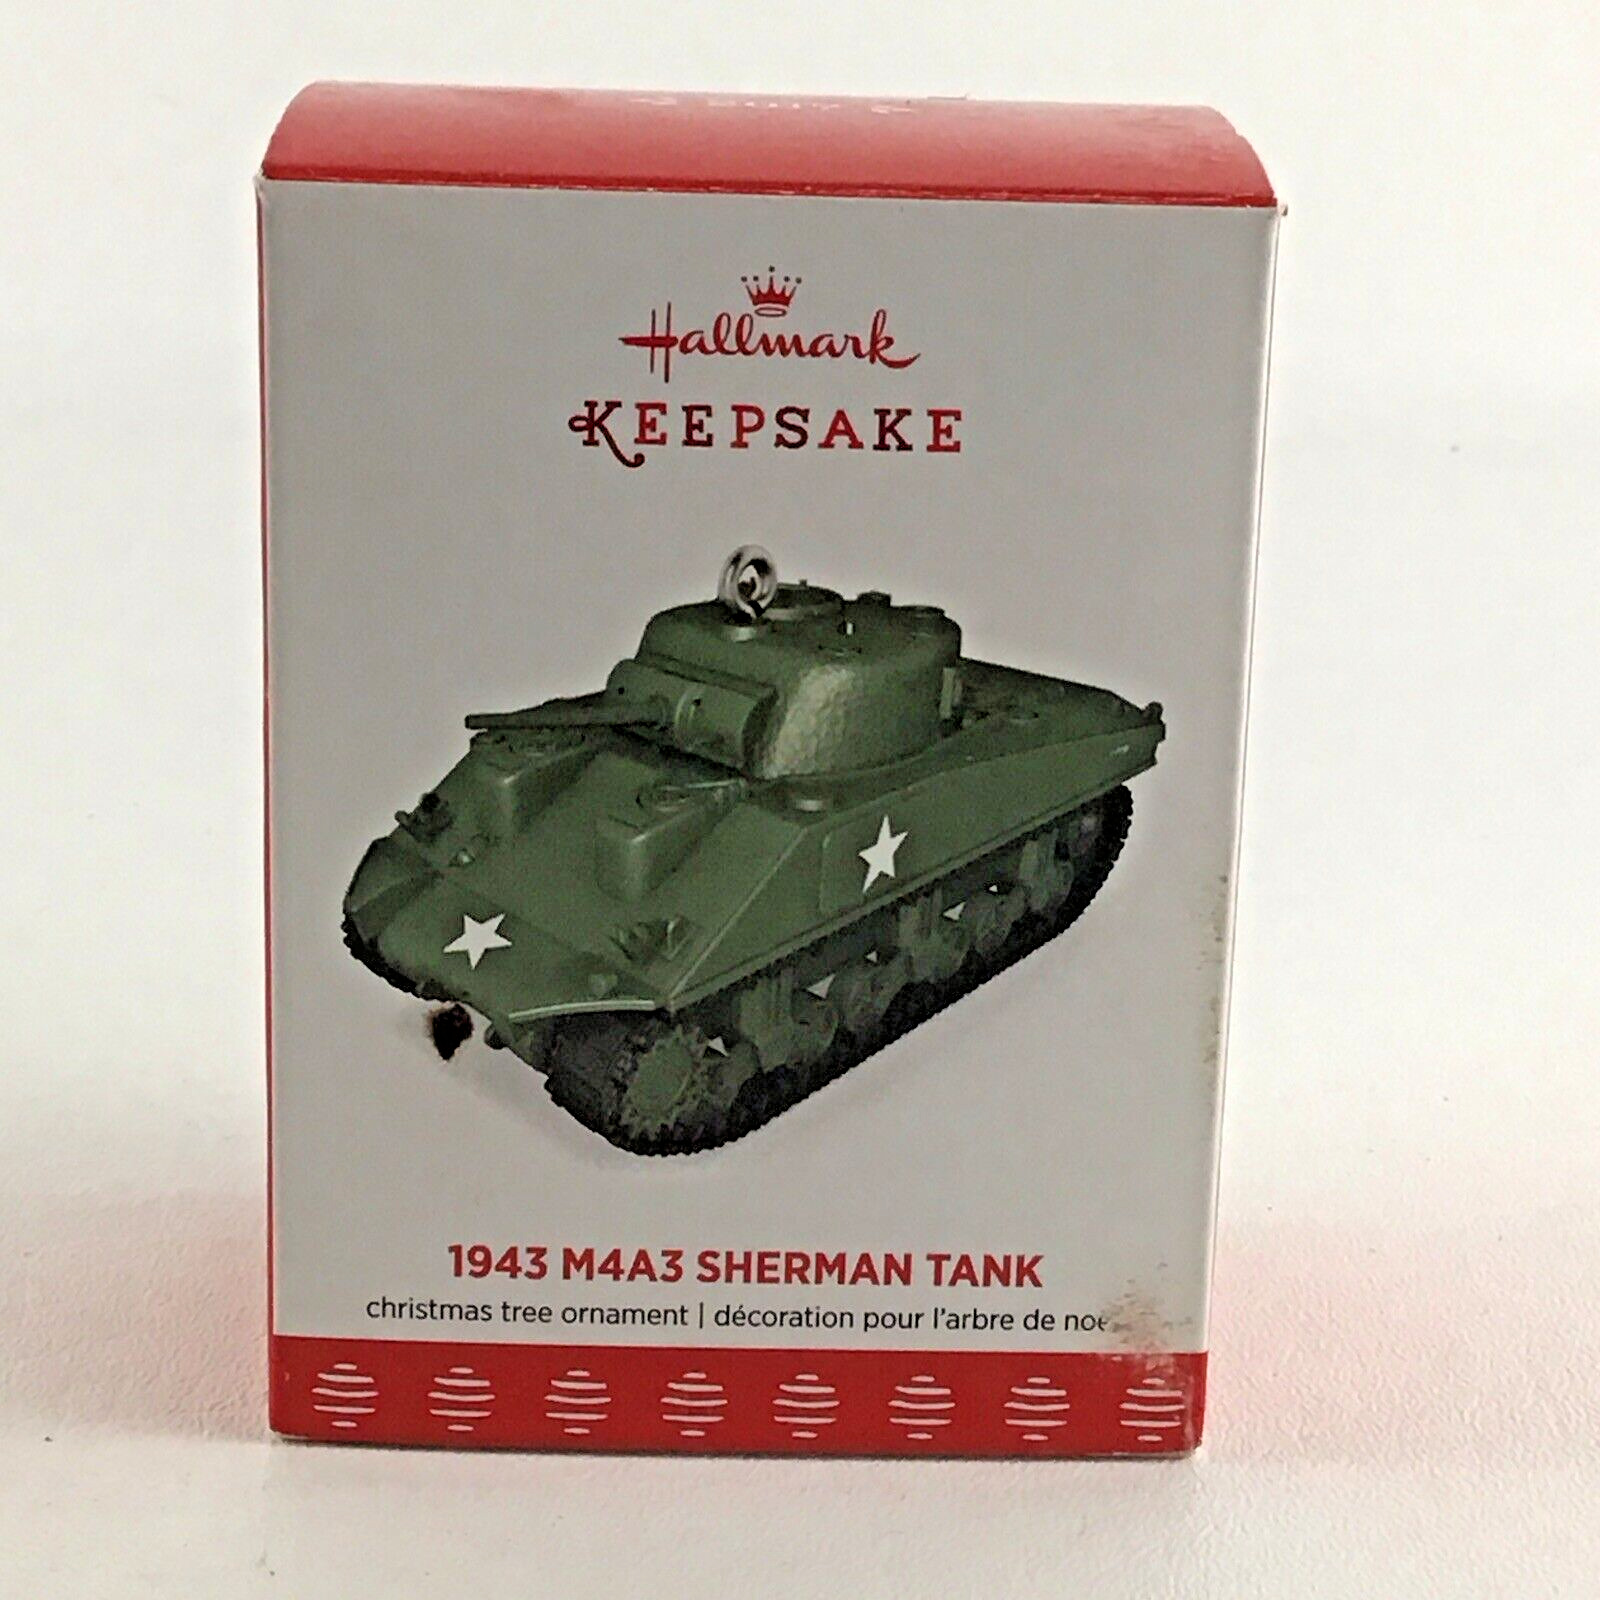 Hallmark Keepsake Christmas Ornament 1943 M4A3 Sherman Tank Army Vehicle 2017